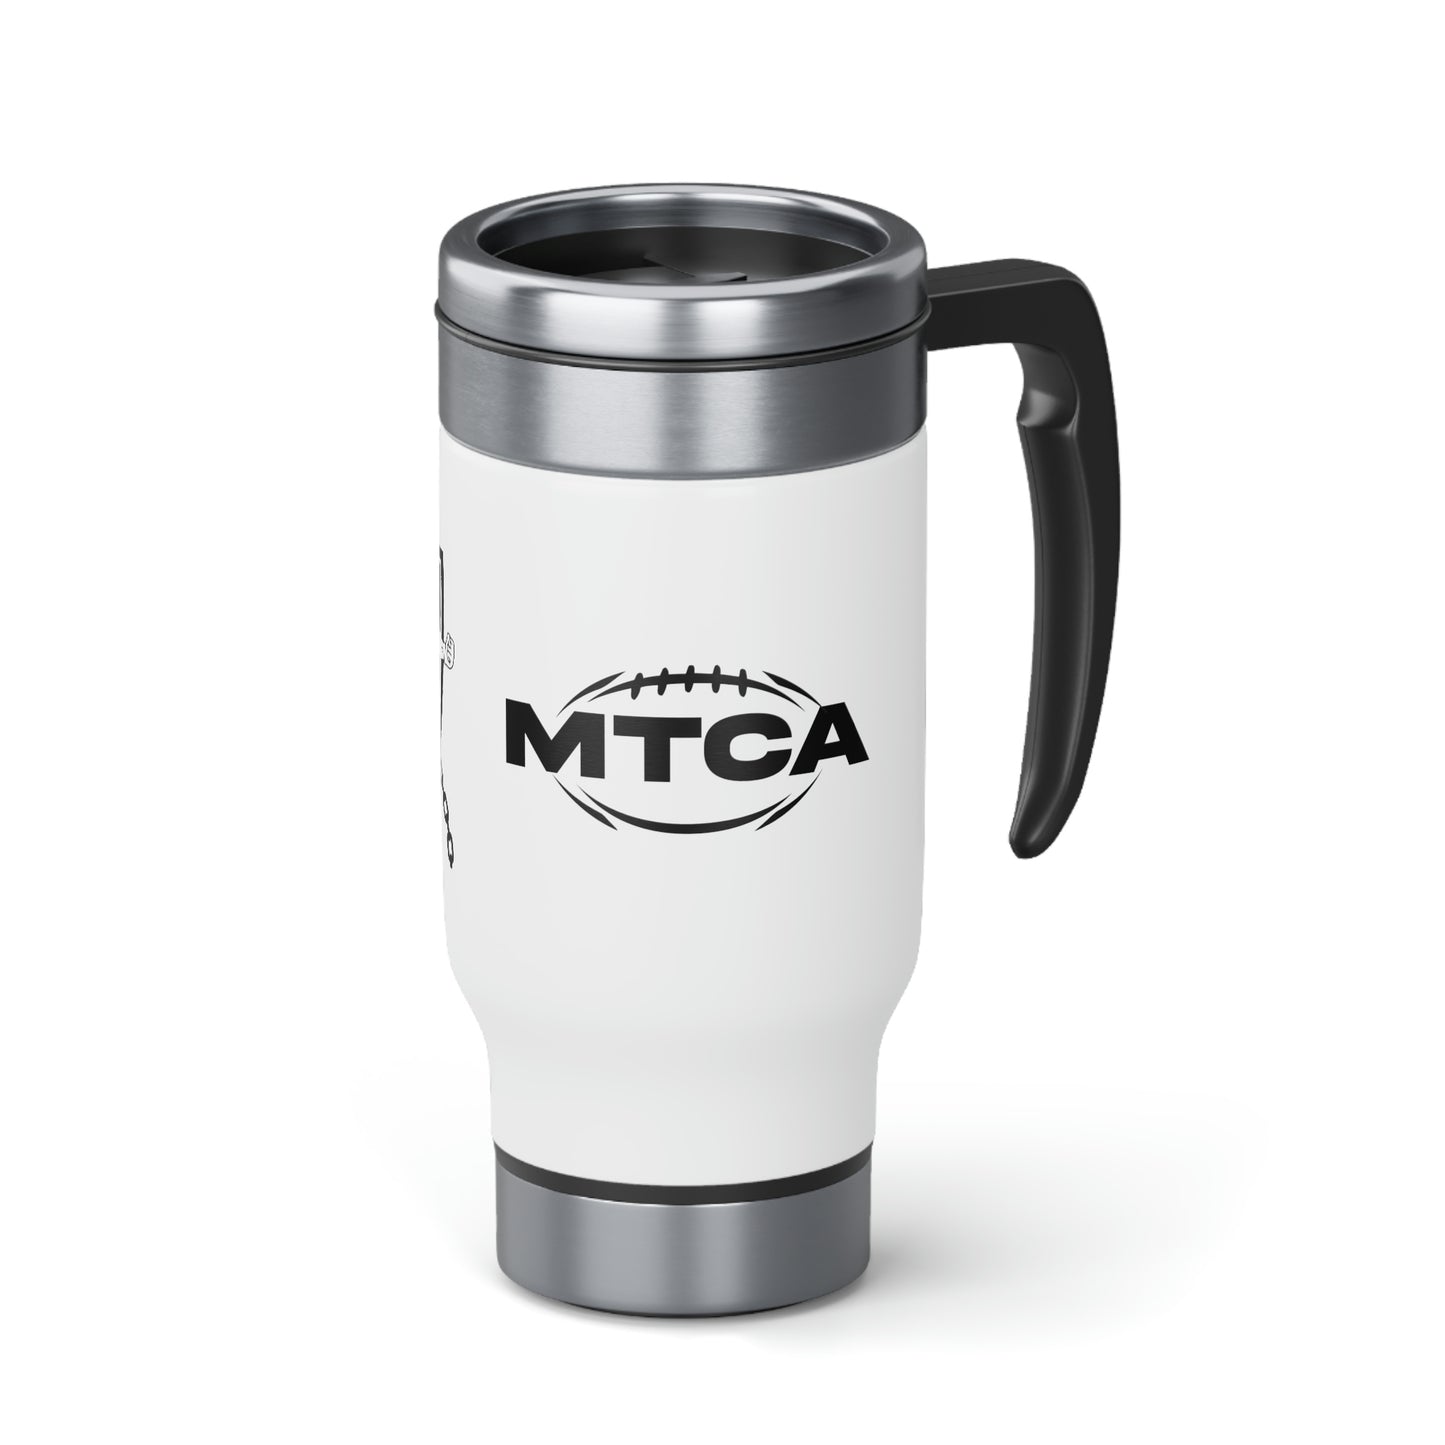 MTCA Stainless Steel Travel Mug with Handle, 14oz